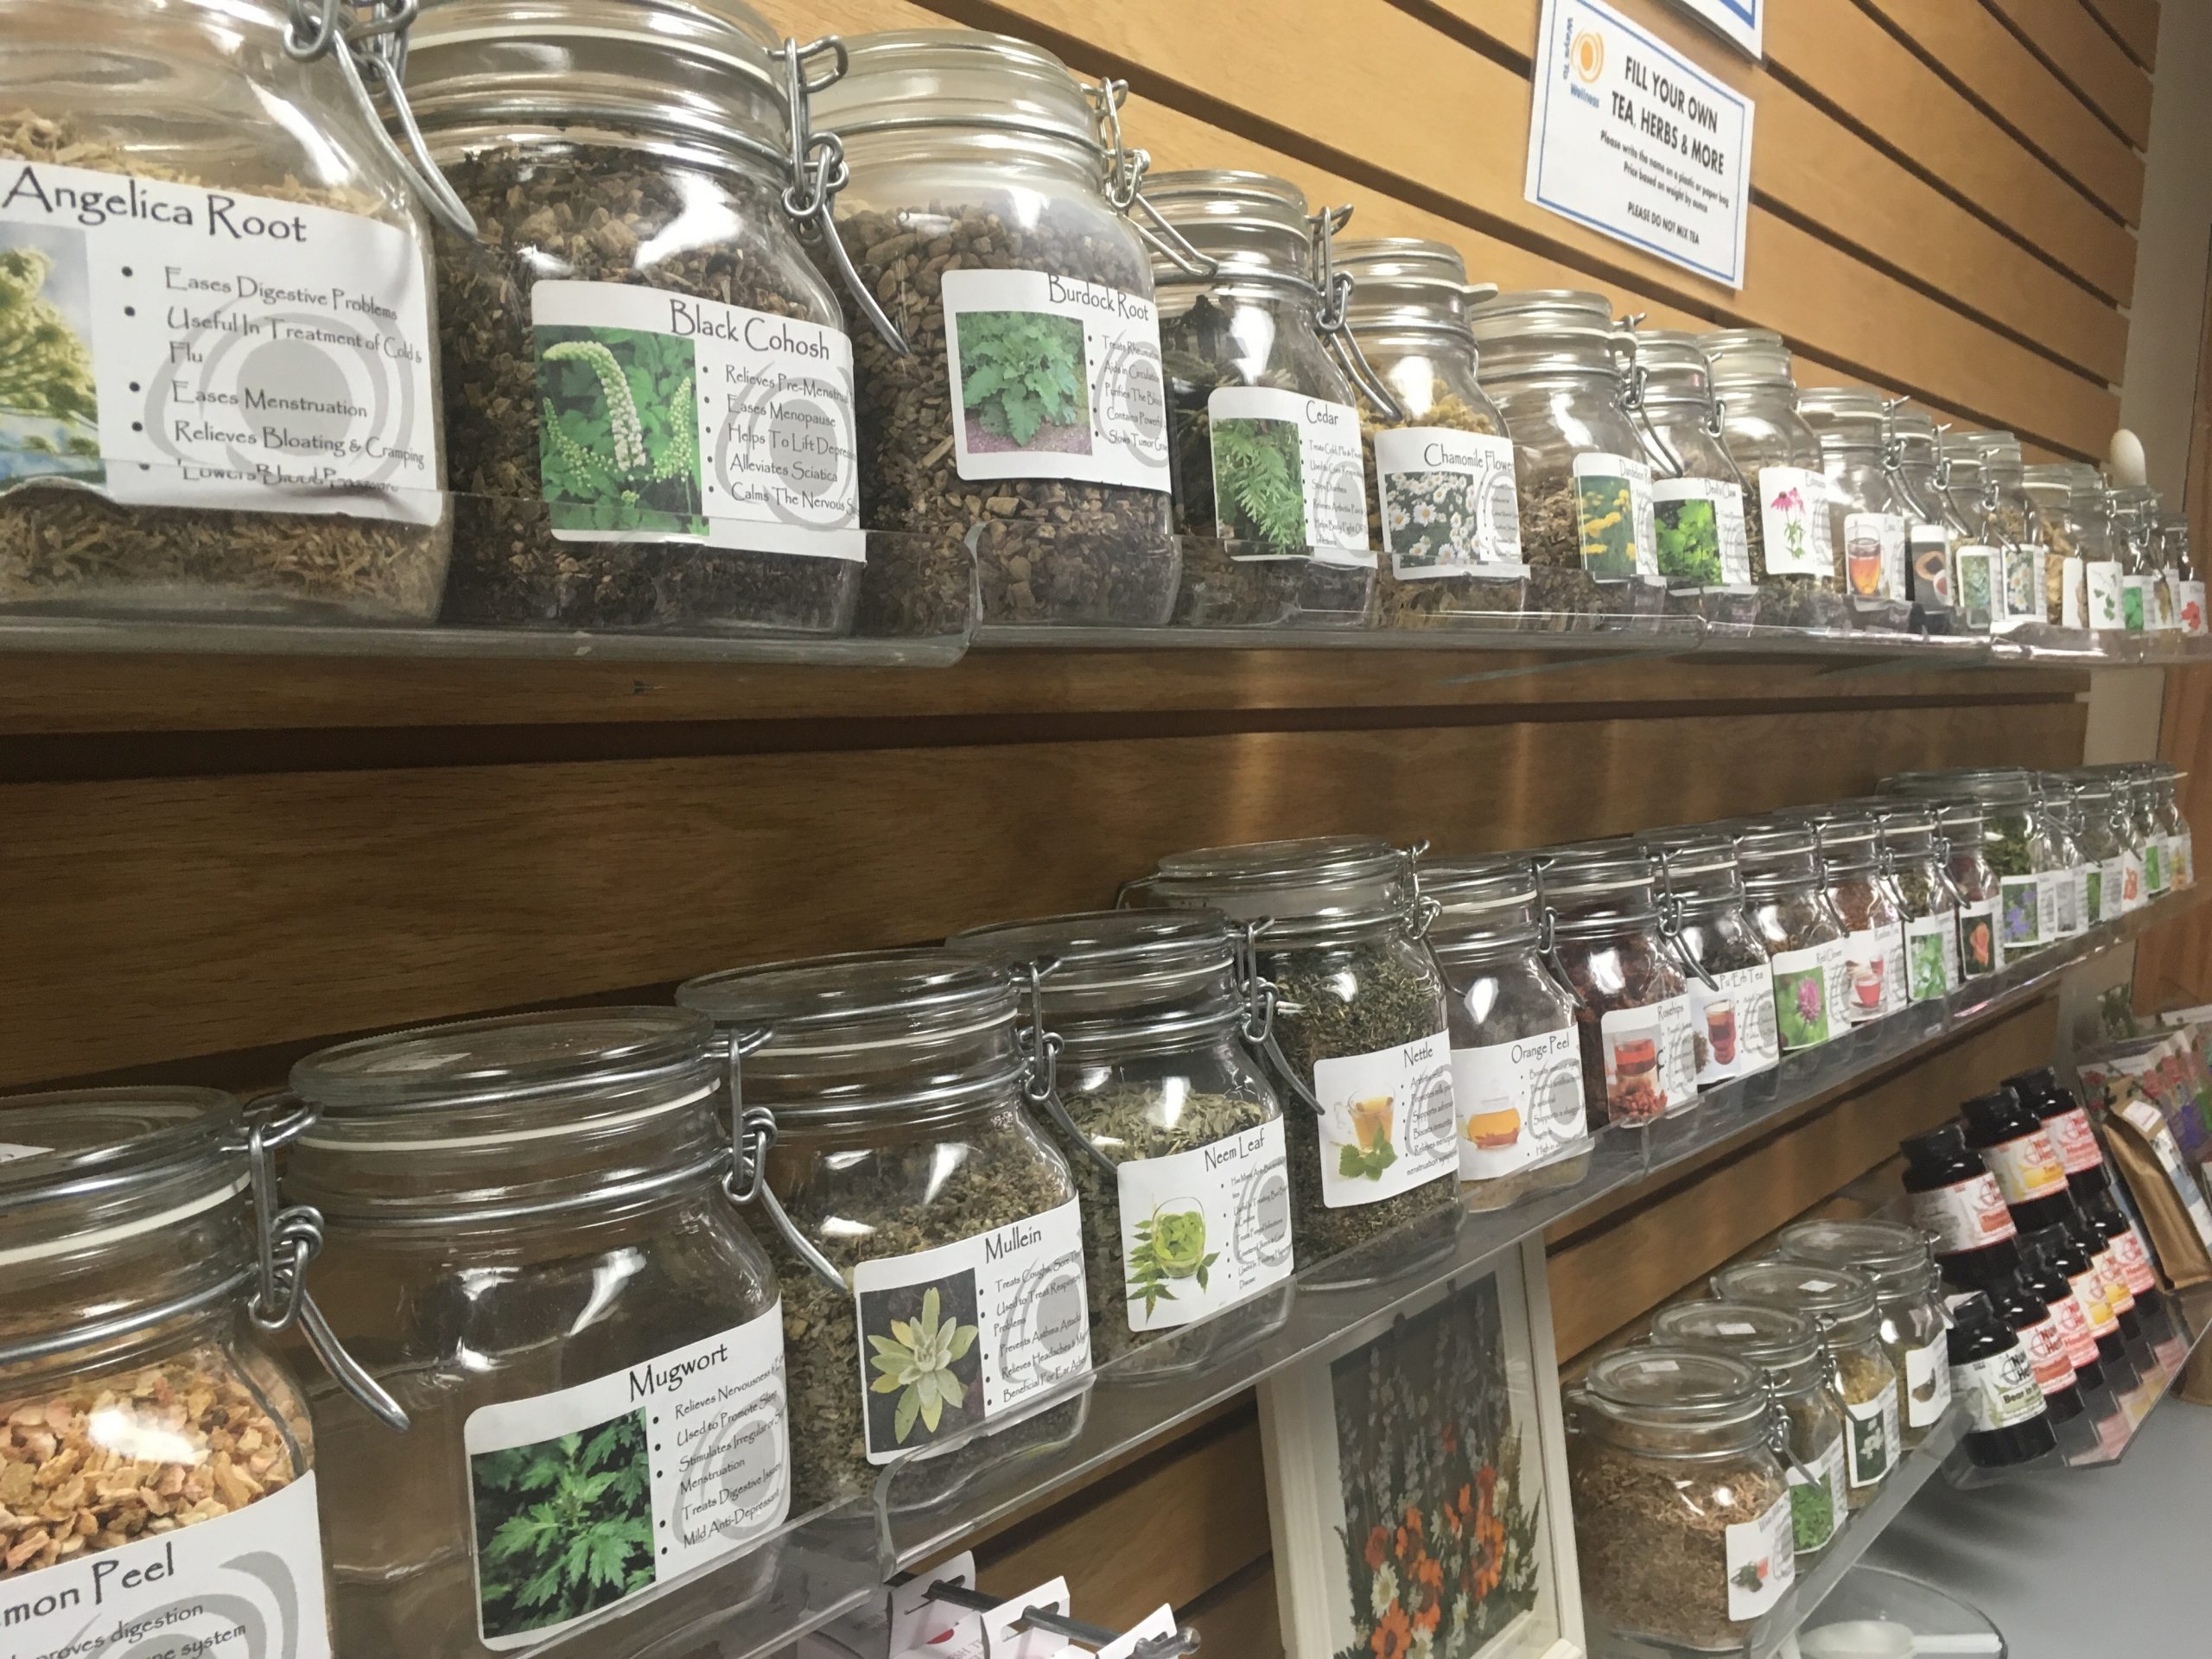 Where To Buy Herbs In Bulk